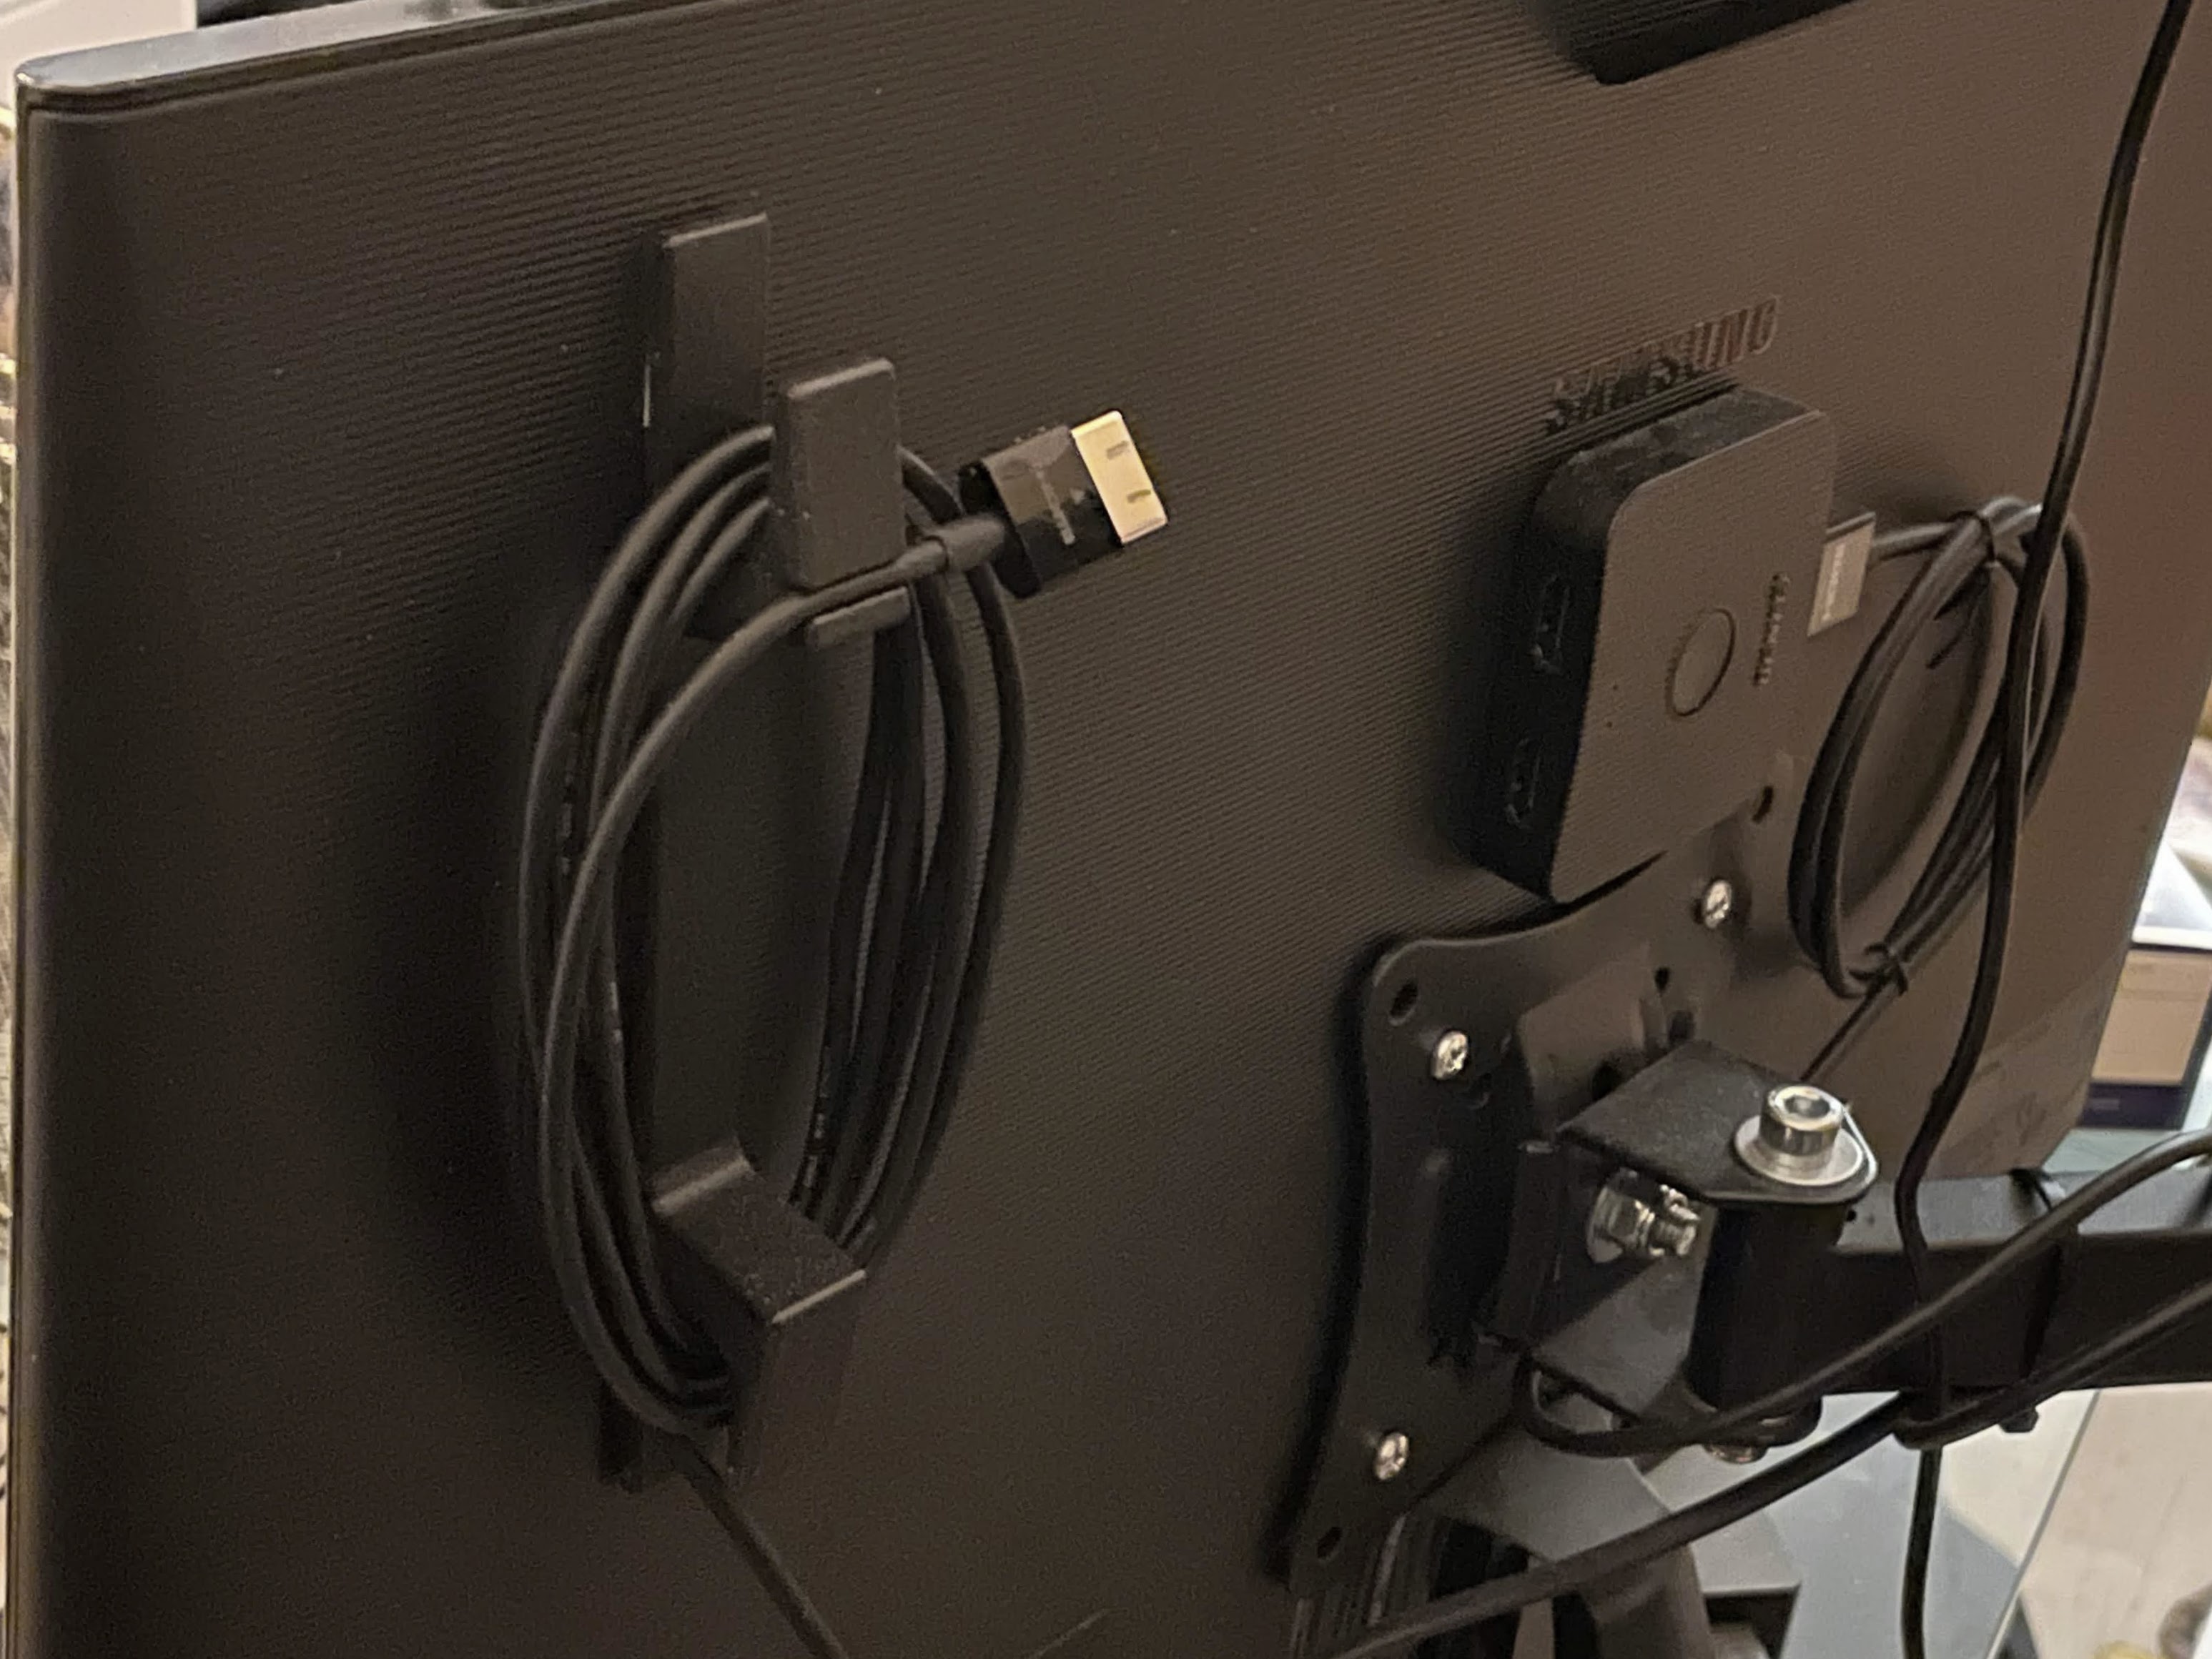 Display / monitor HDMI cable organizer